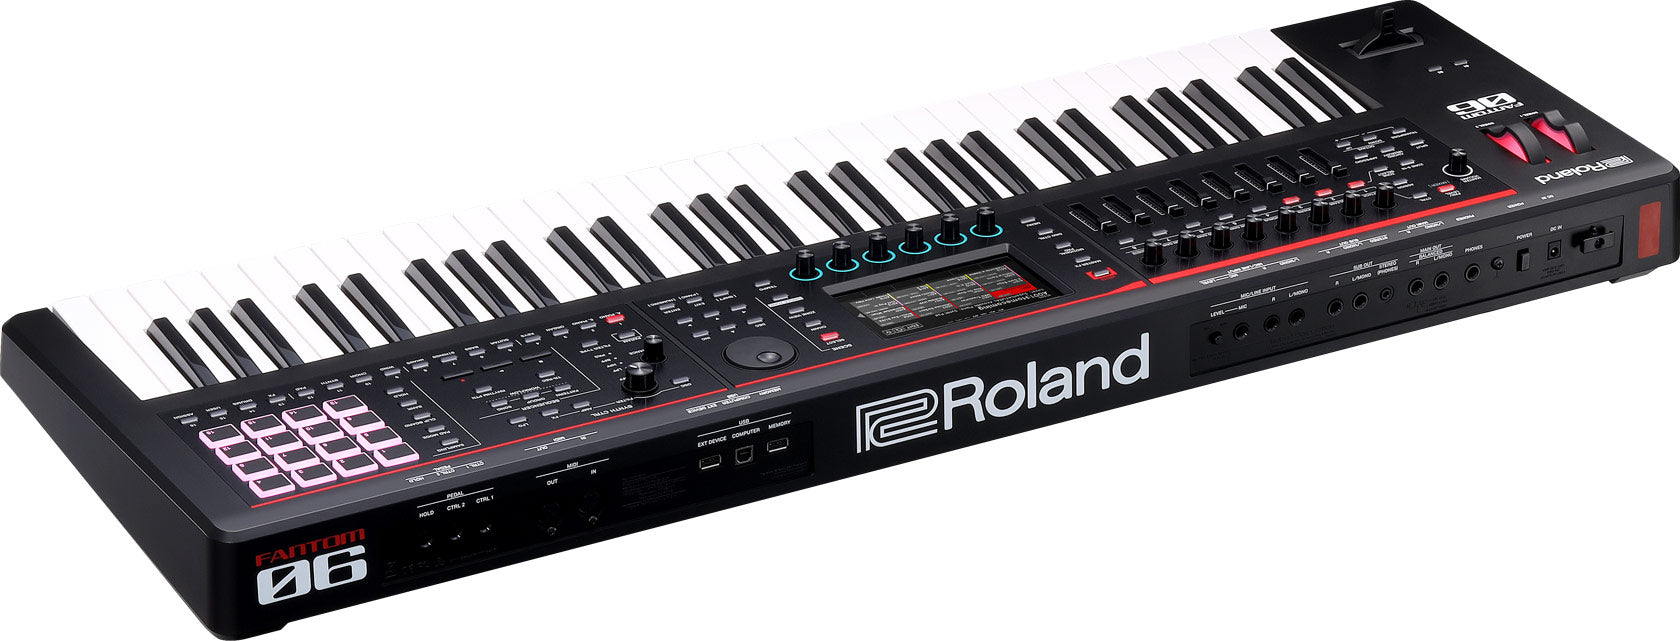 Roland FANTOM-06 61-Key Workstation Keyboard